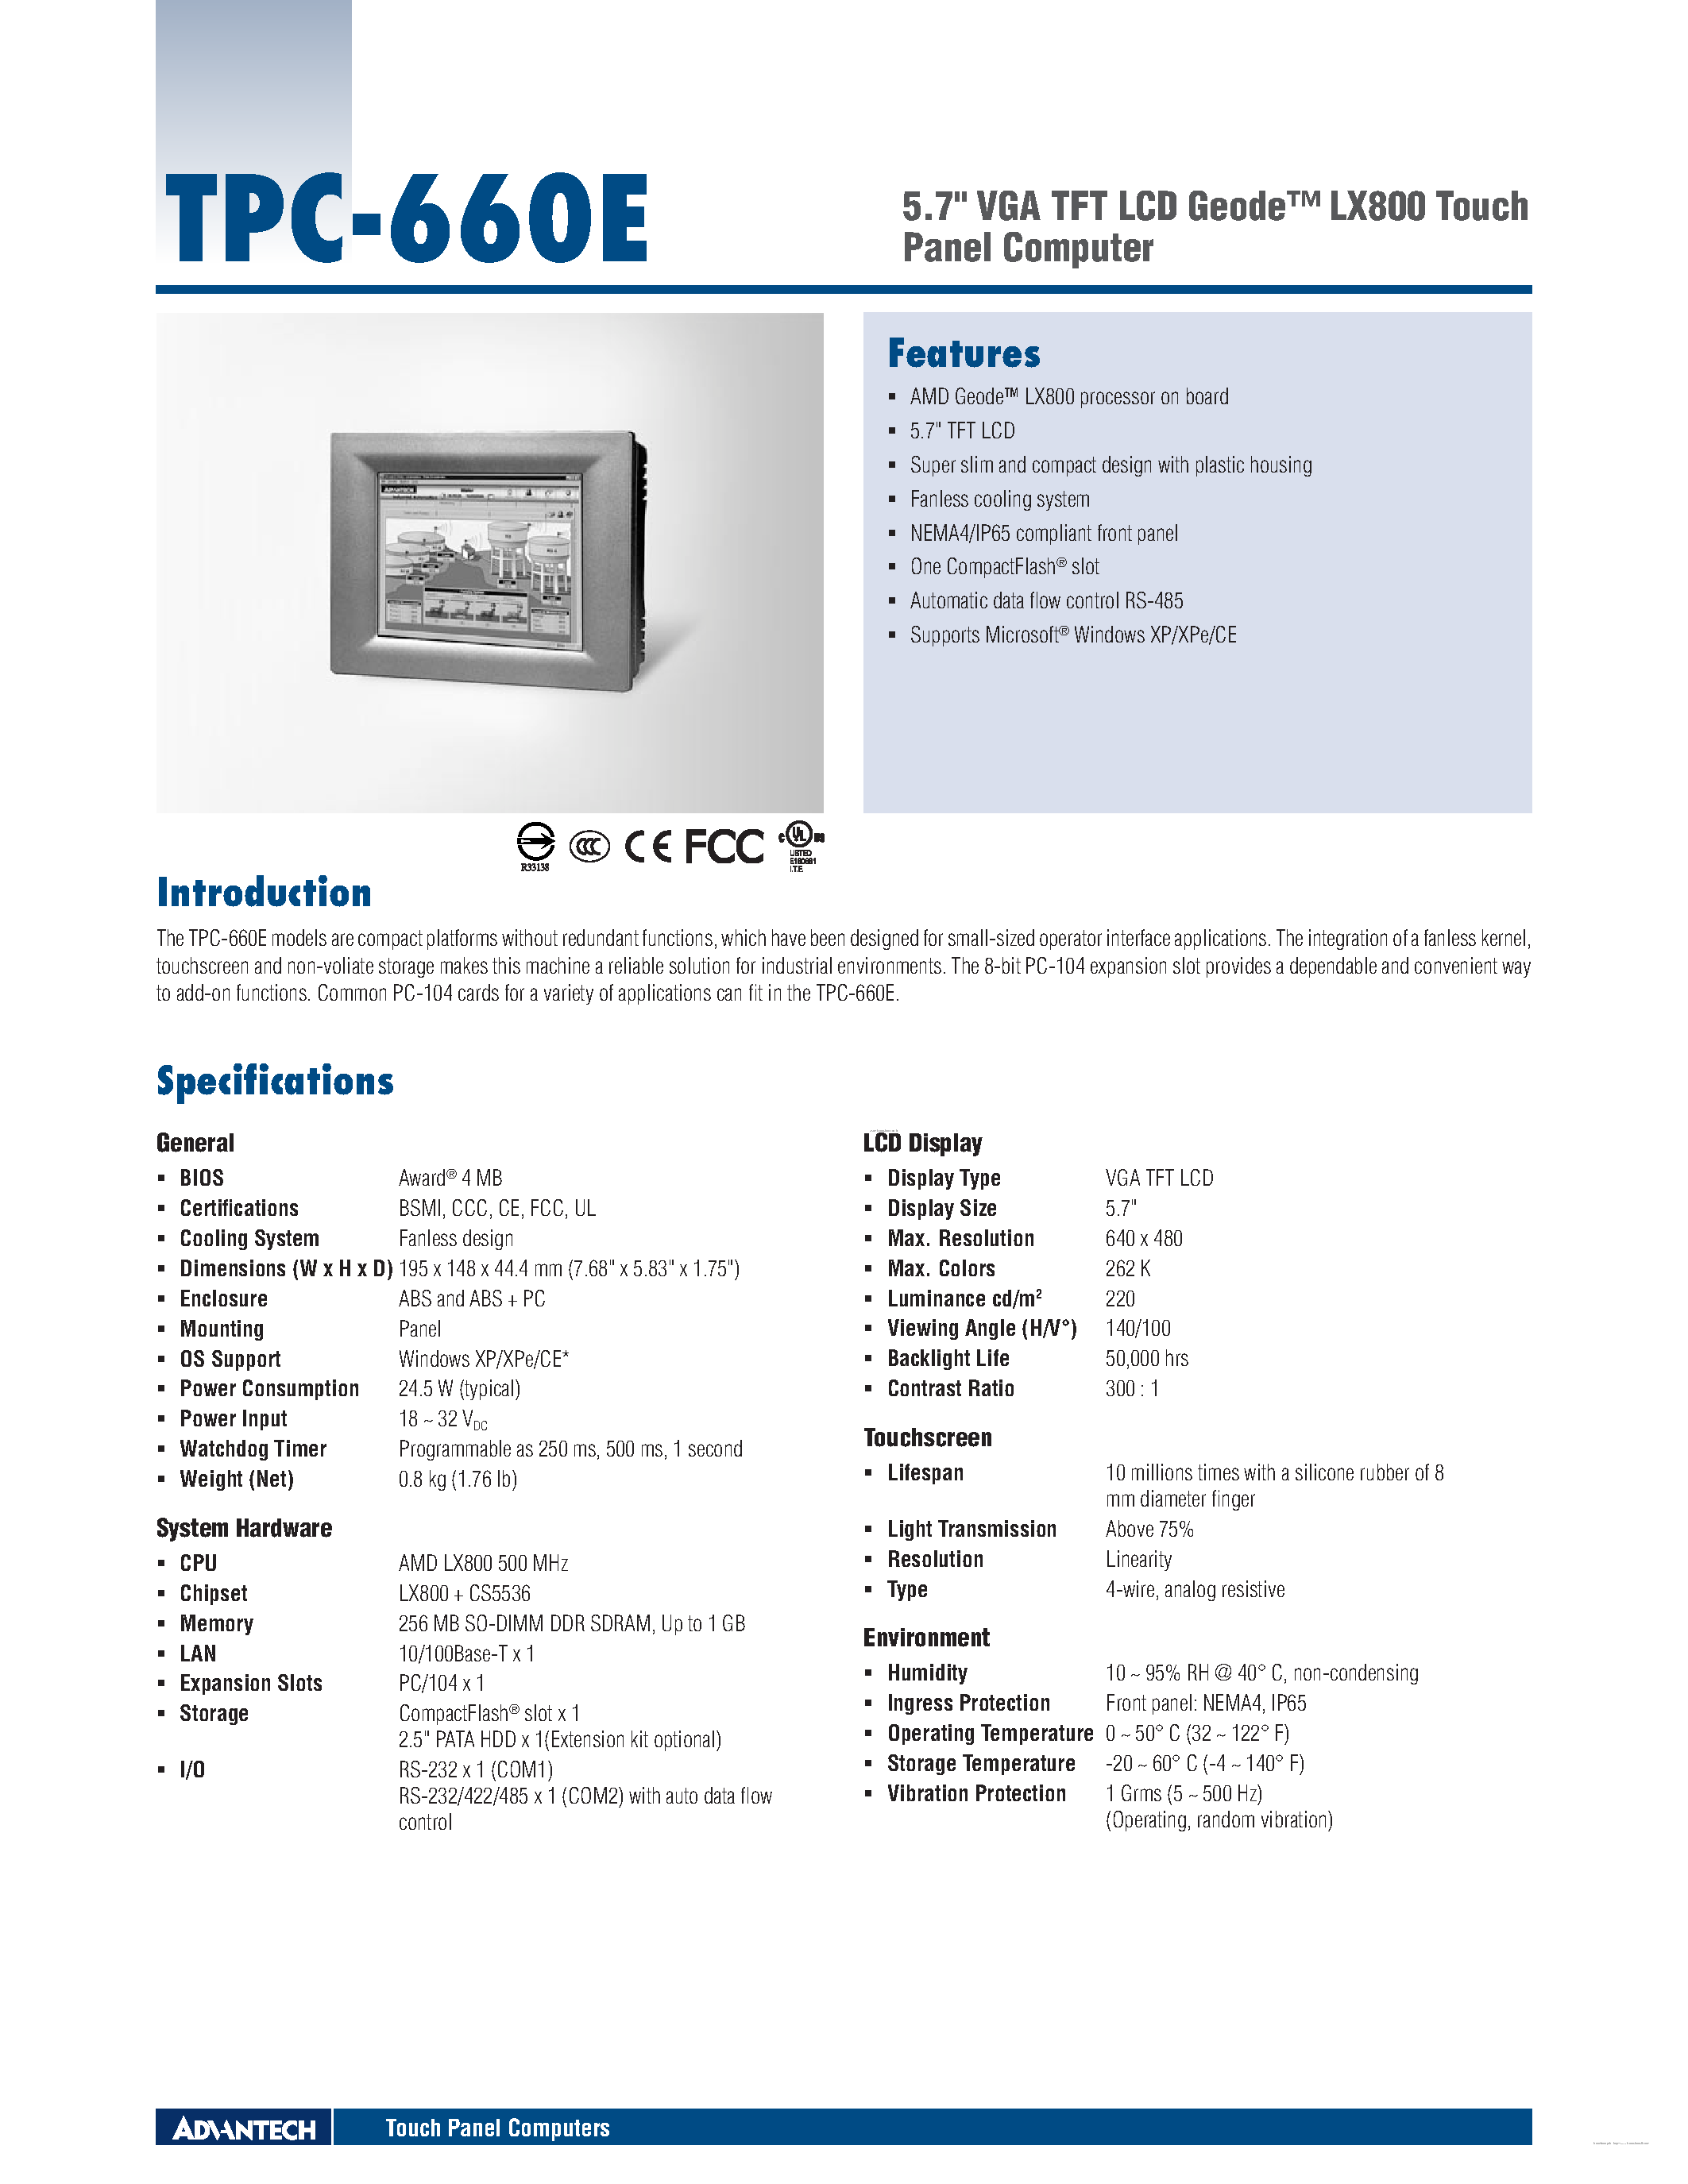 Datasheet TPC-660E - 5.7 VGA TFT LCD Geode page 1